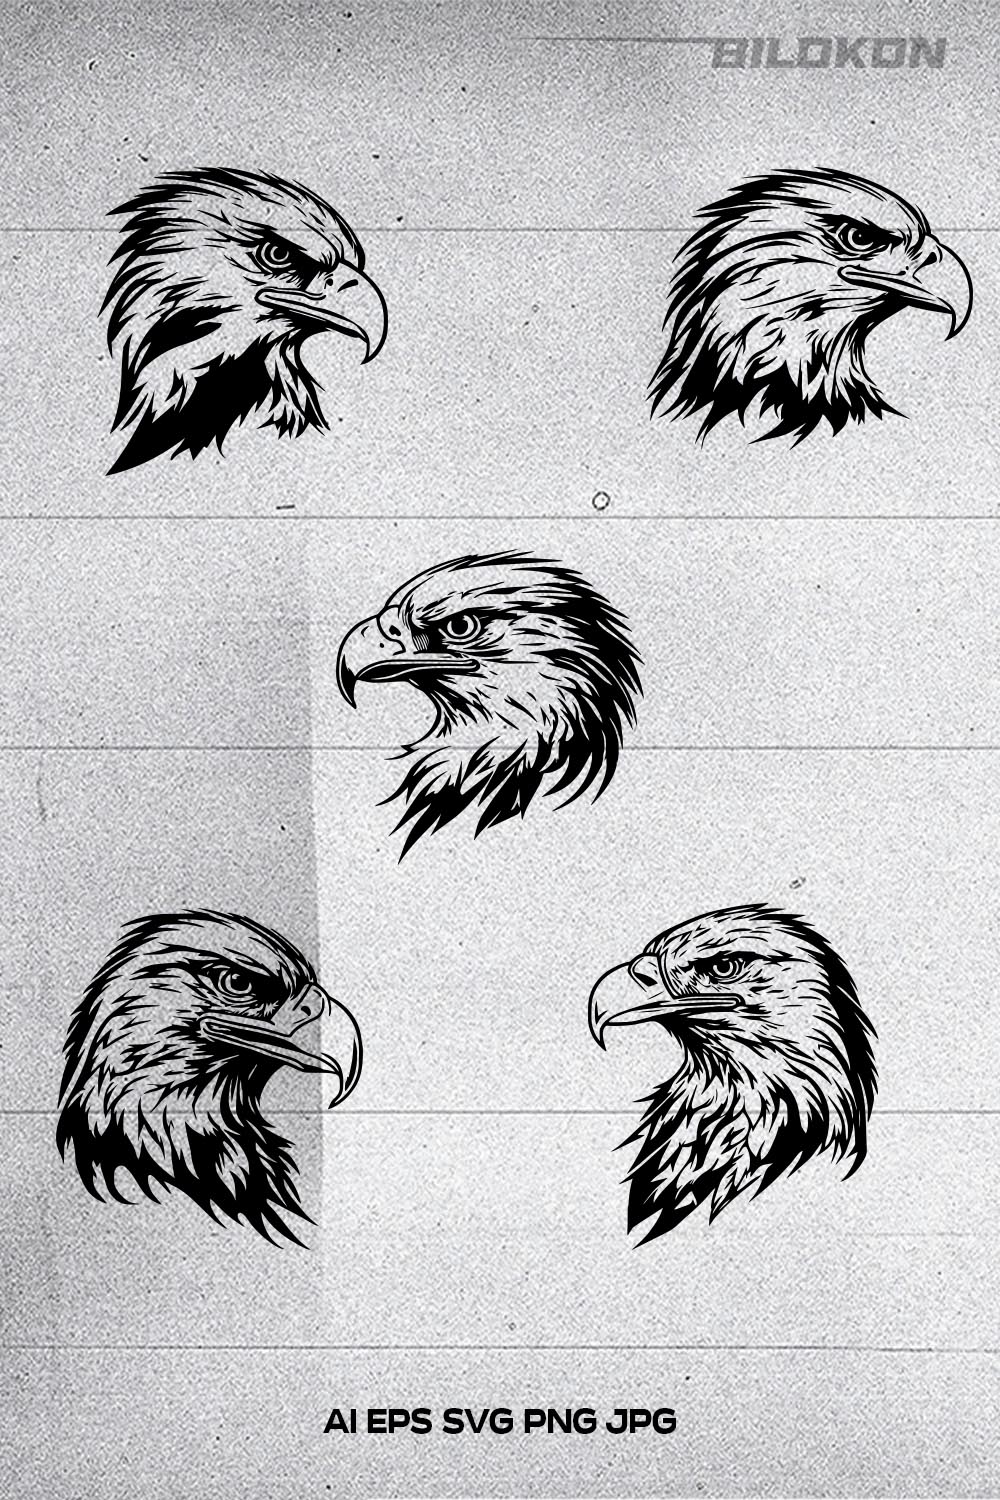 Eagle Head icon, eagle logo, American eagle, Illustration SVG Vector pinterest preview image.